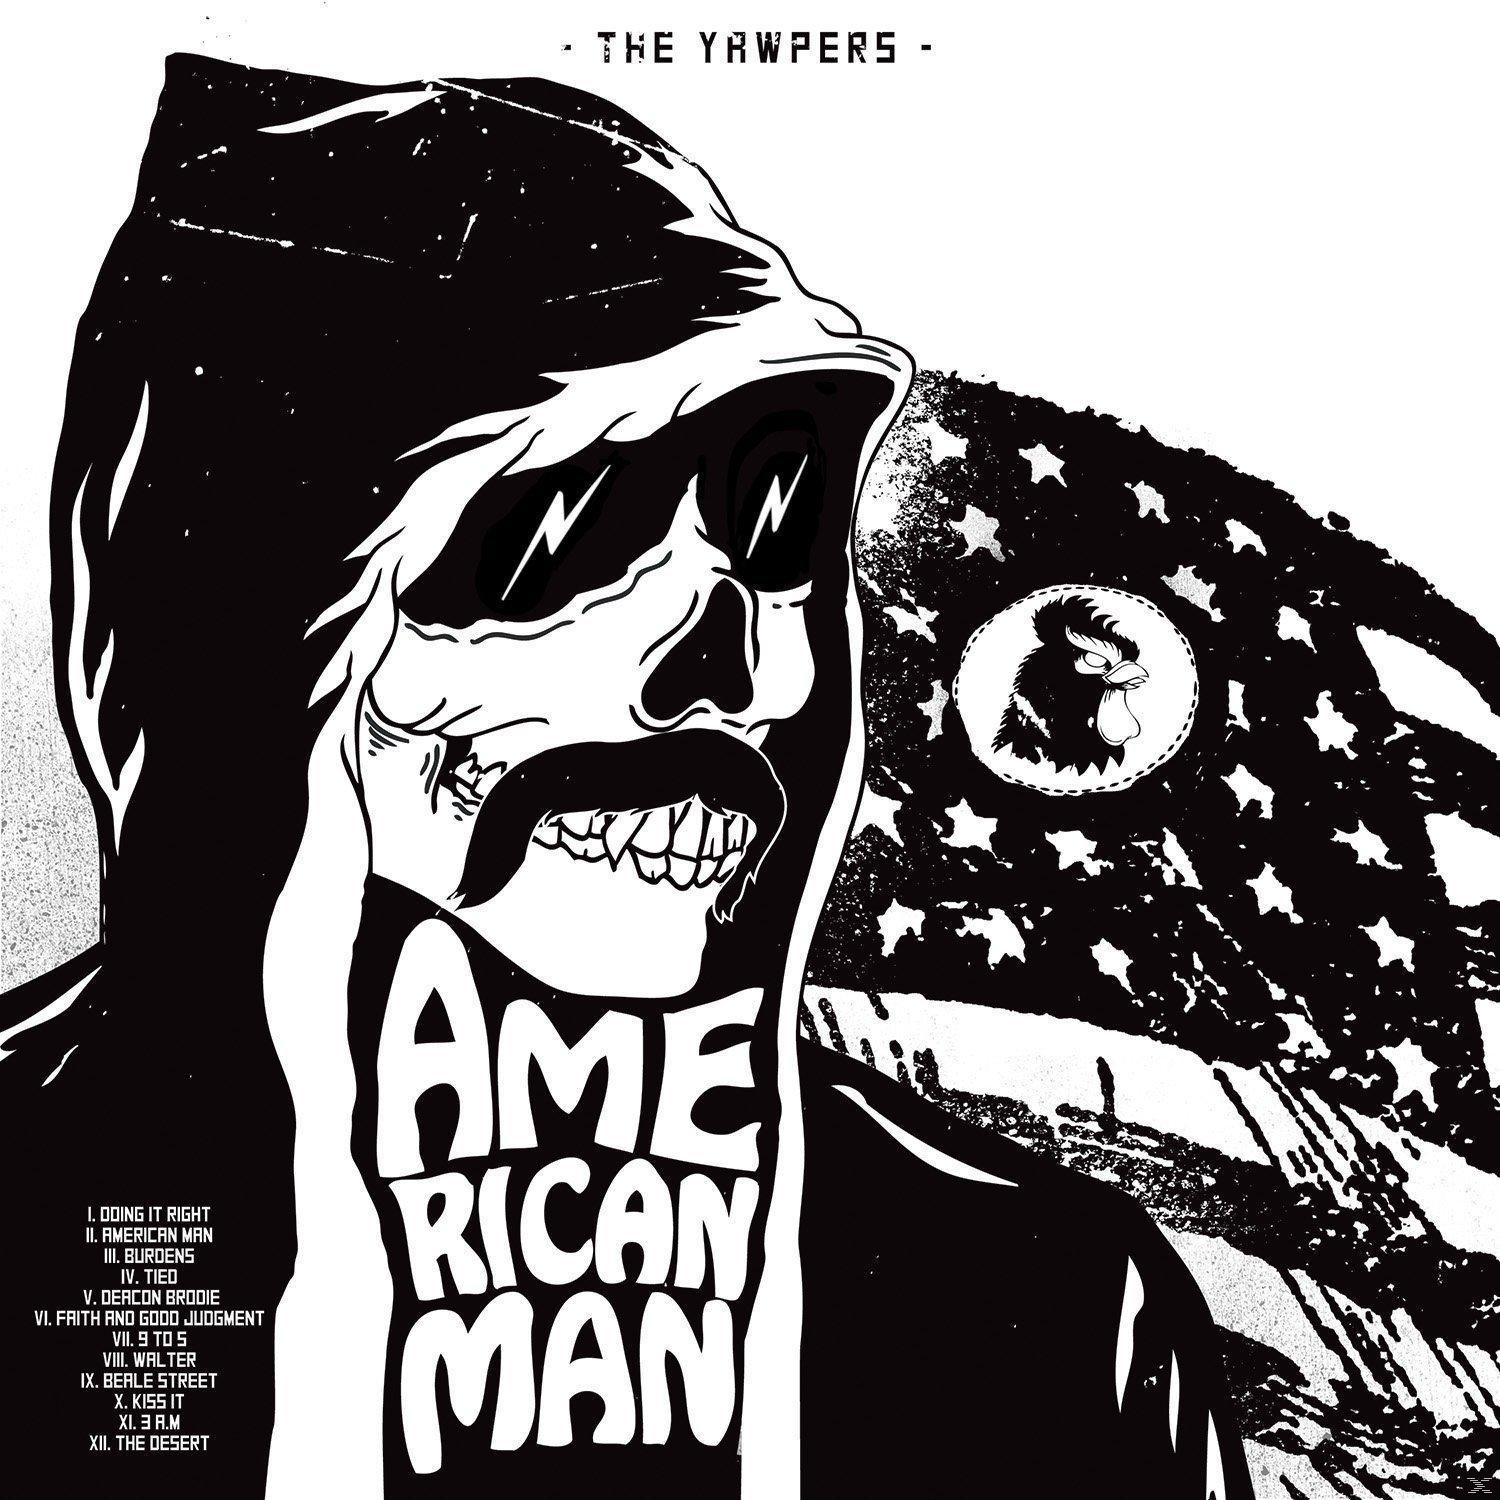 Yawpers American (180 Gr. - Vinyl) - Man (Vinyl)